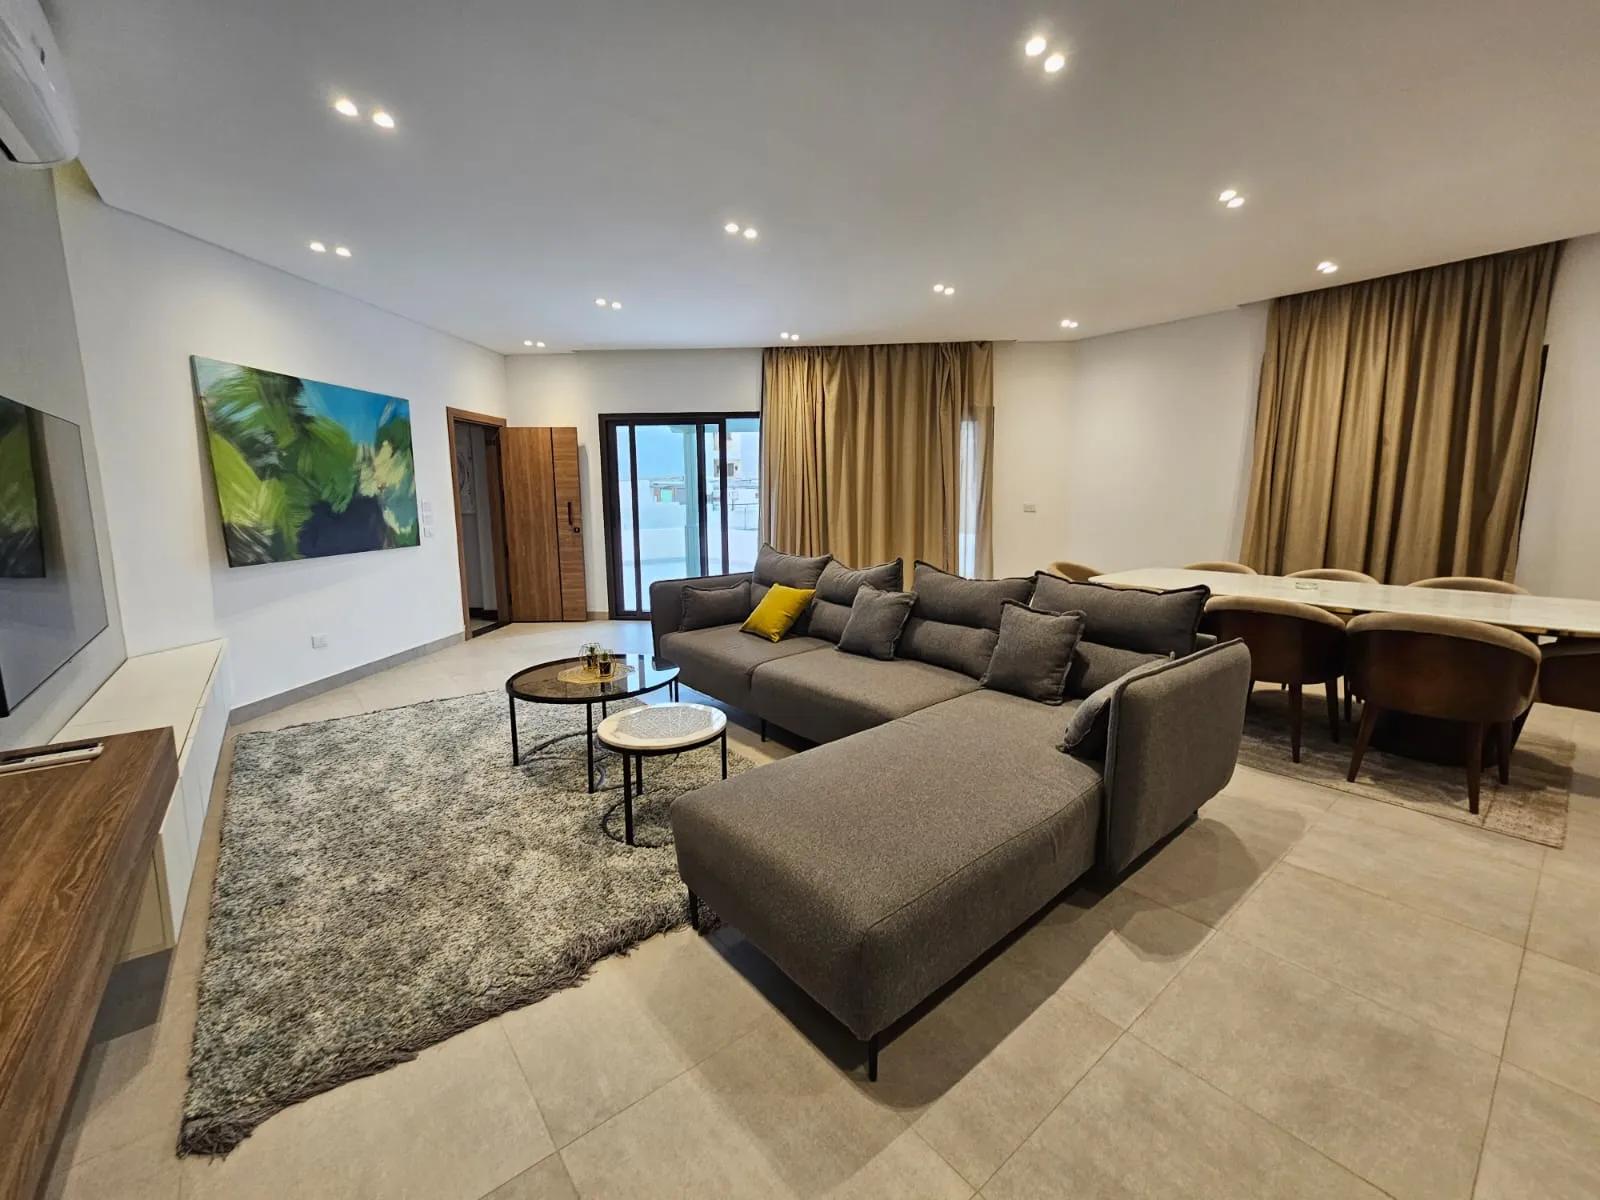 Apartments For Sale In Maadi Maadi Sarayat Area: 165 m² consists of 3 Bedrooms 4 Bathrooms Modern furnished 5 stars #5790